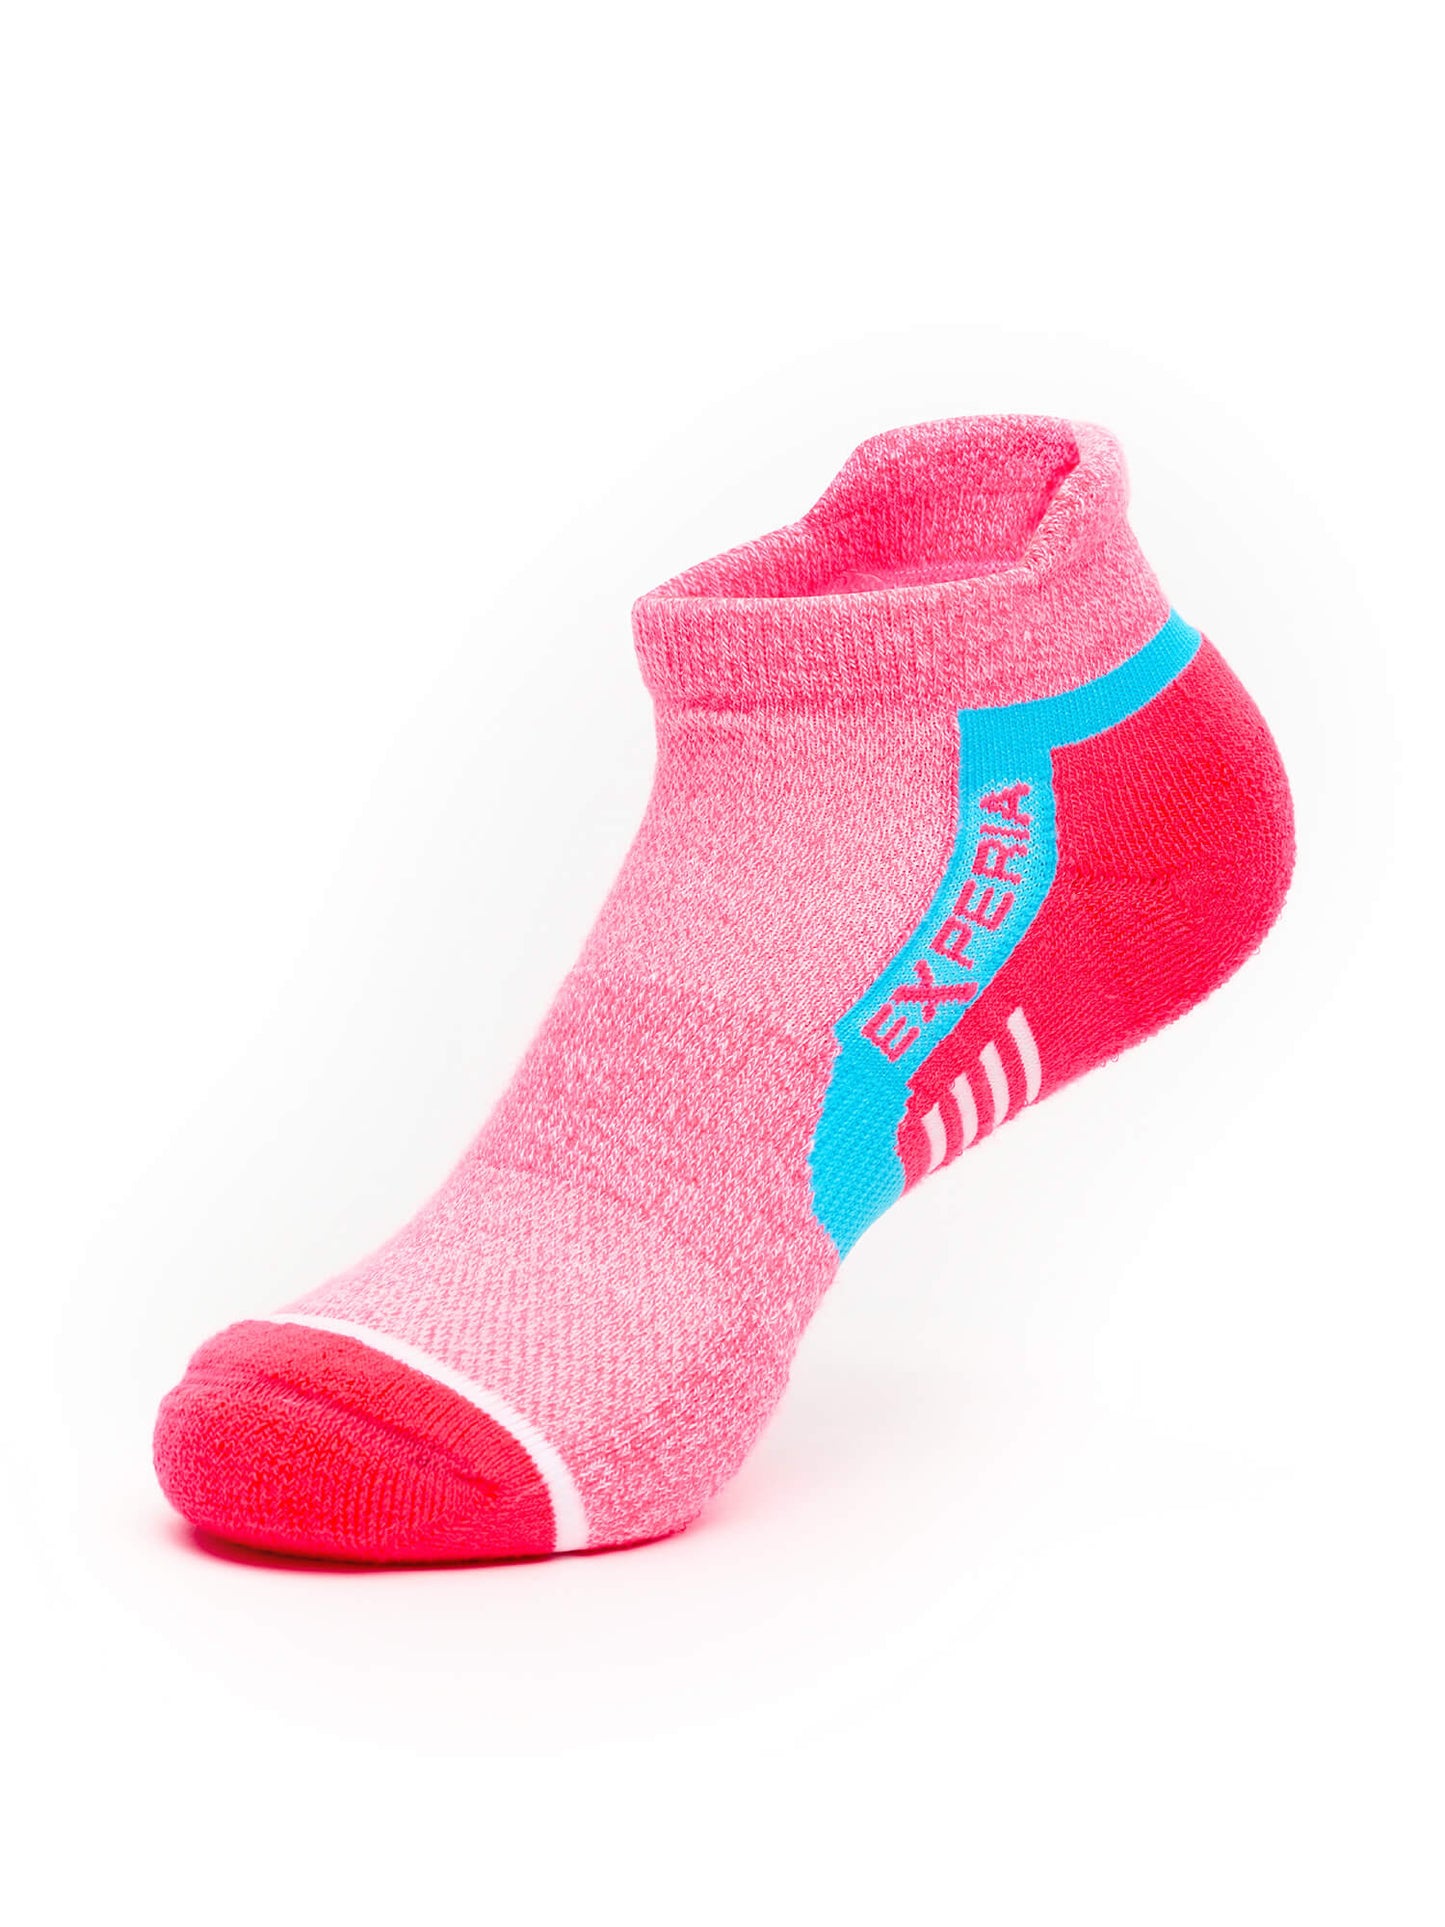 Side of Thorlos Experia Repreve Low Cut Socks in Pink